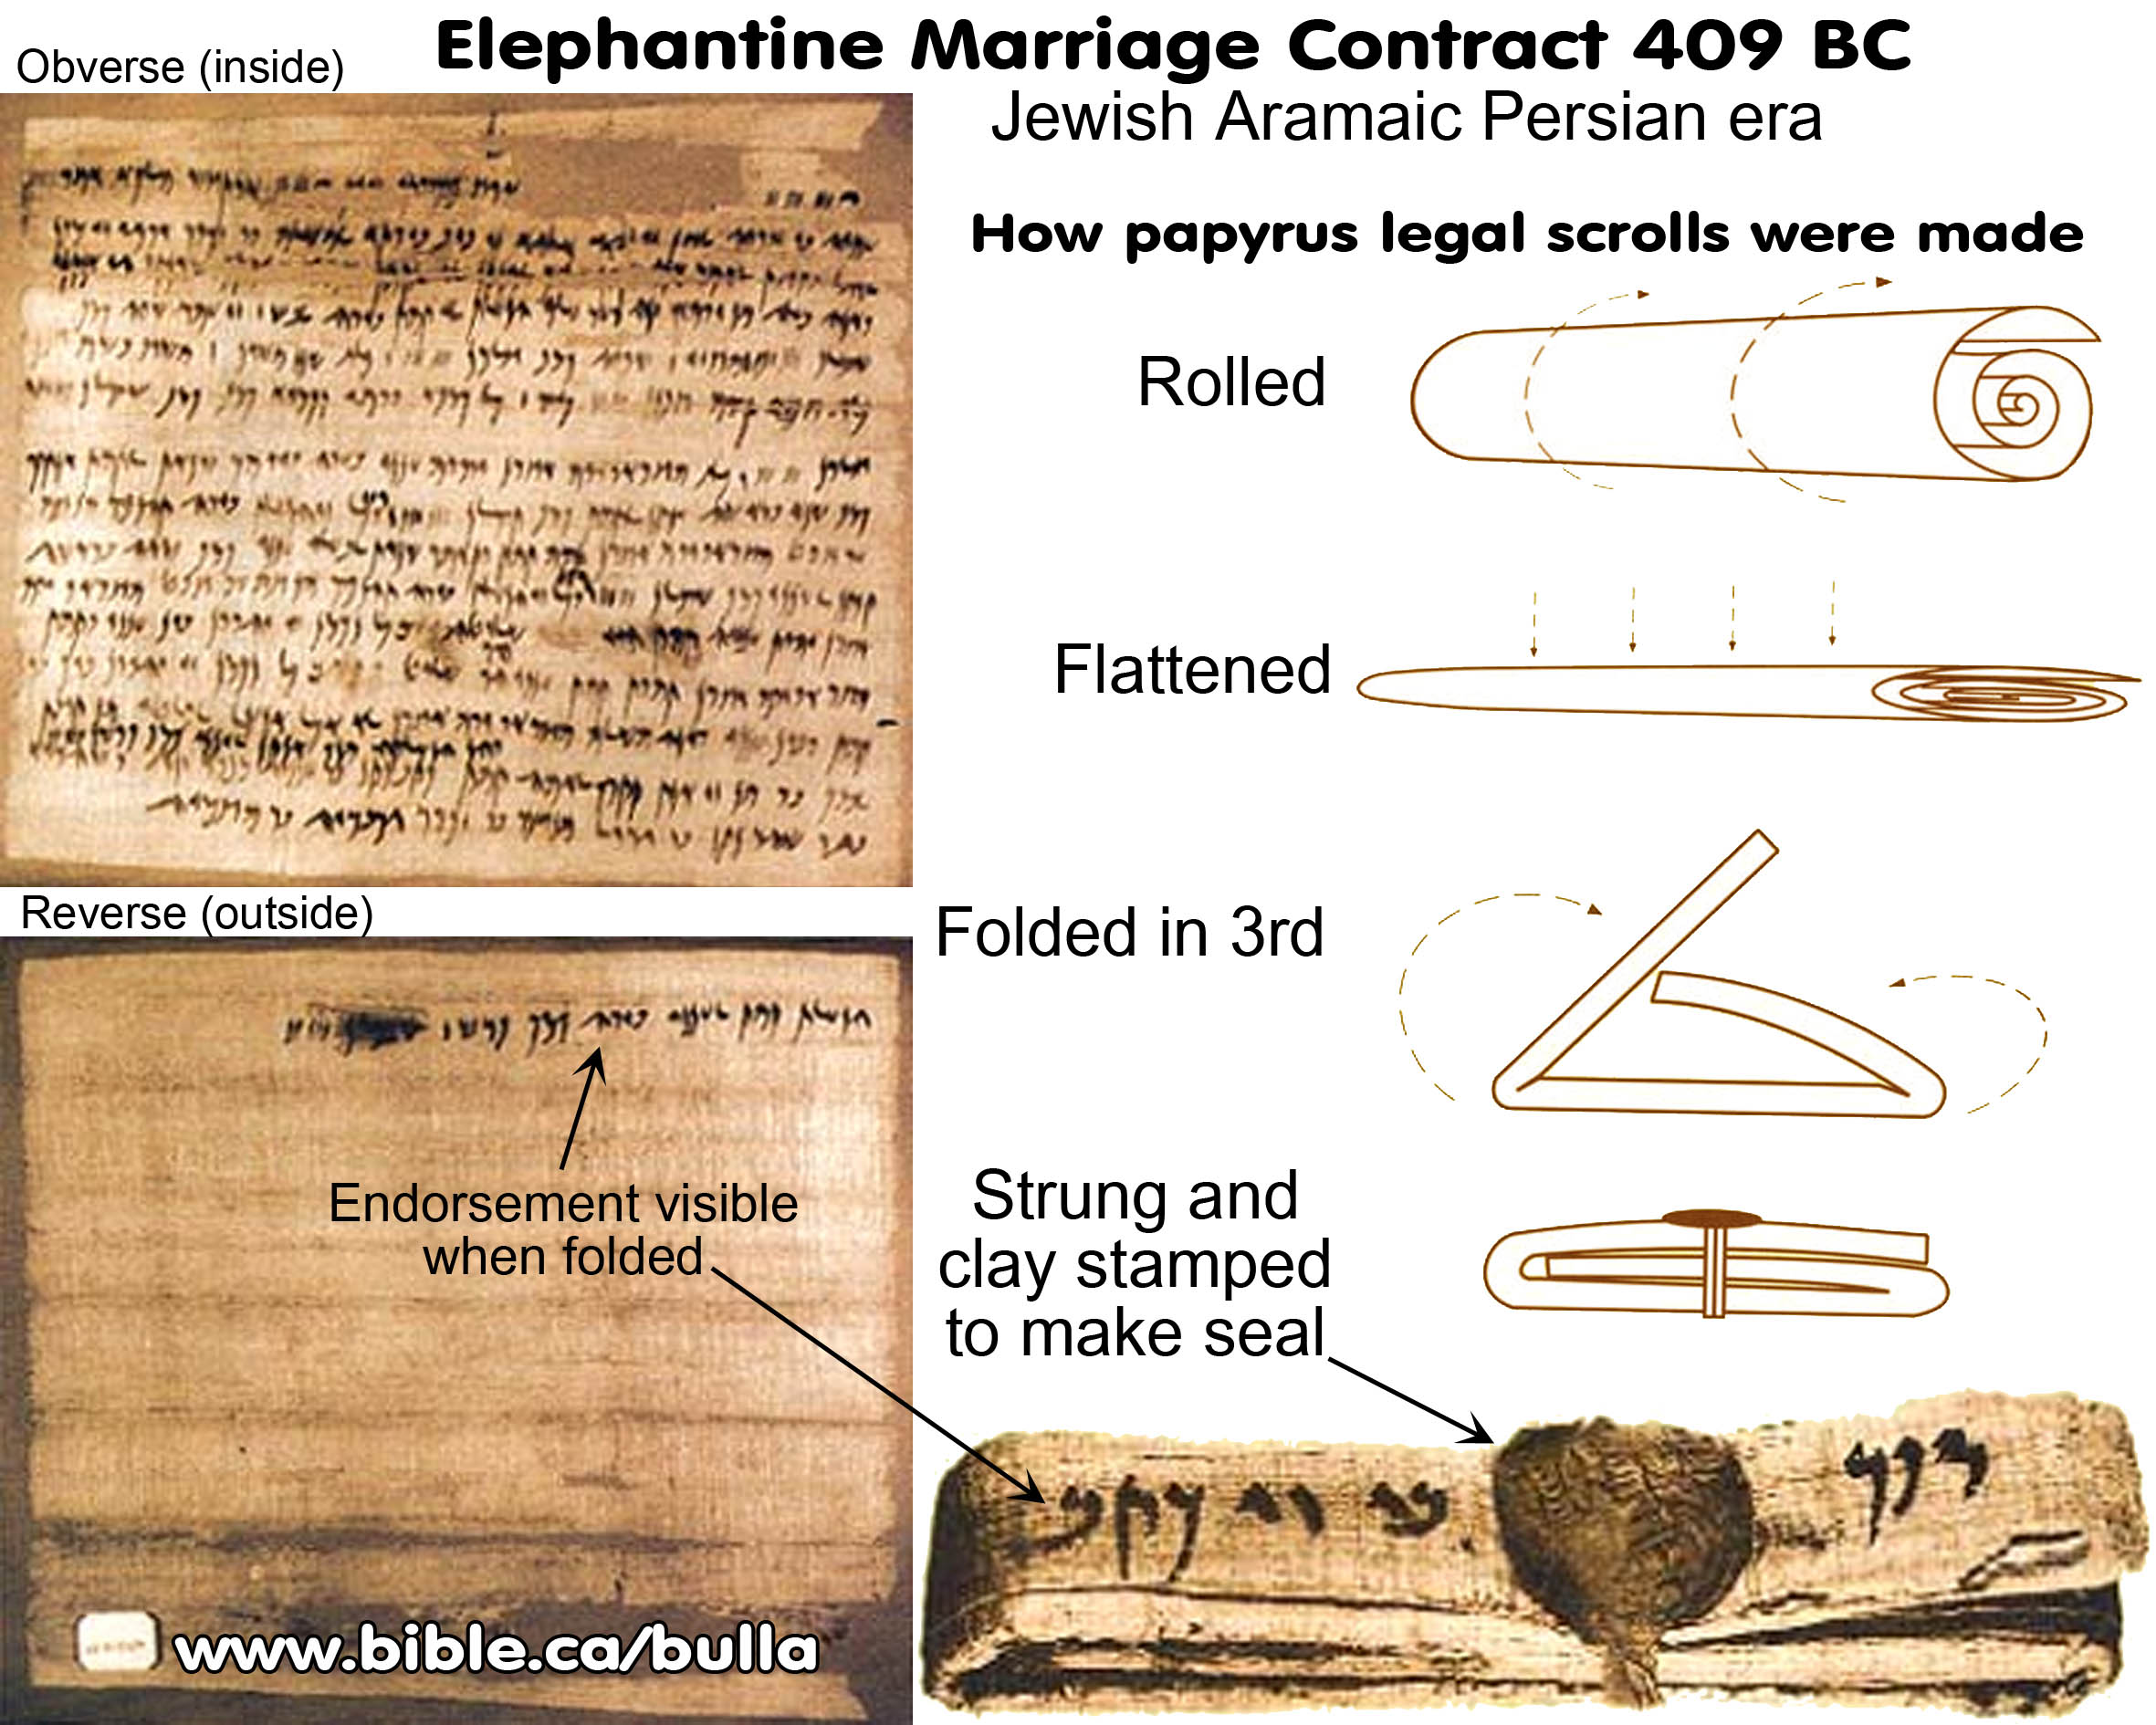 Elephantine Marriage Contract 409 BC